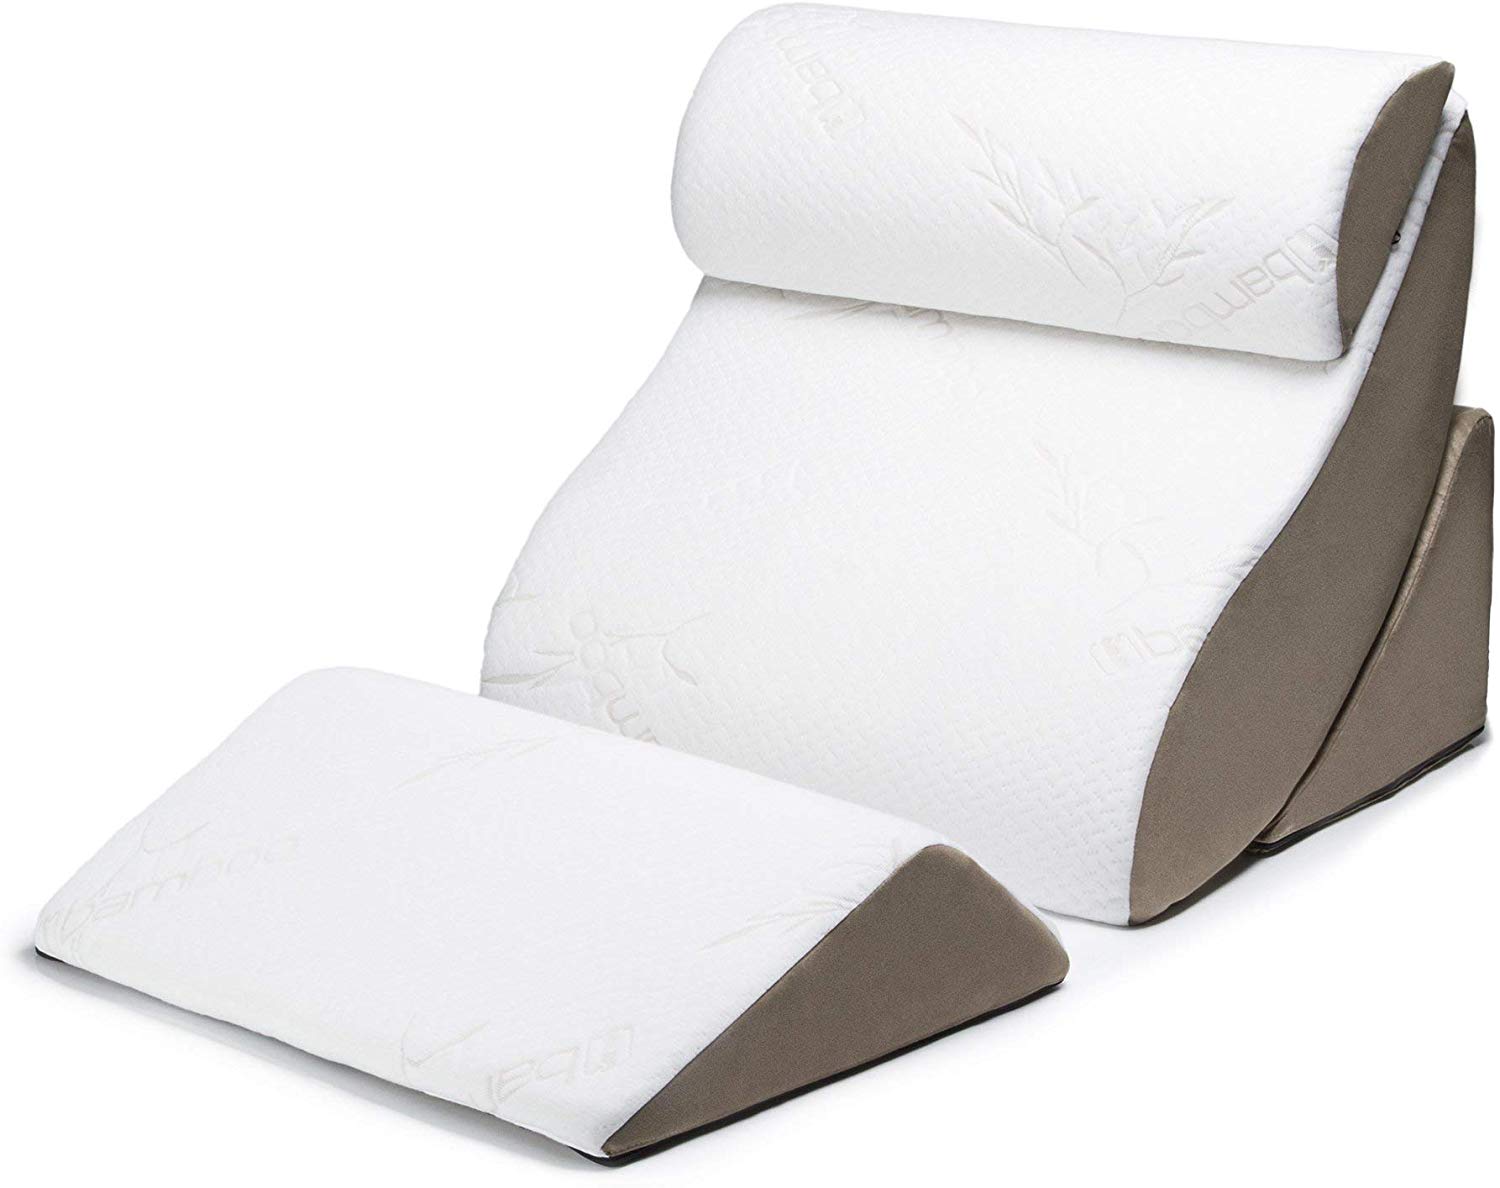 Avana Kind Orthopedic Support Pillow Comfort System 